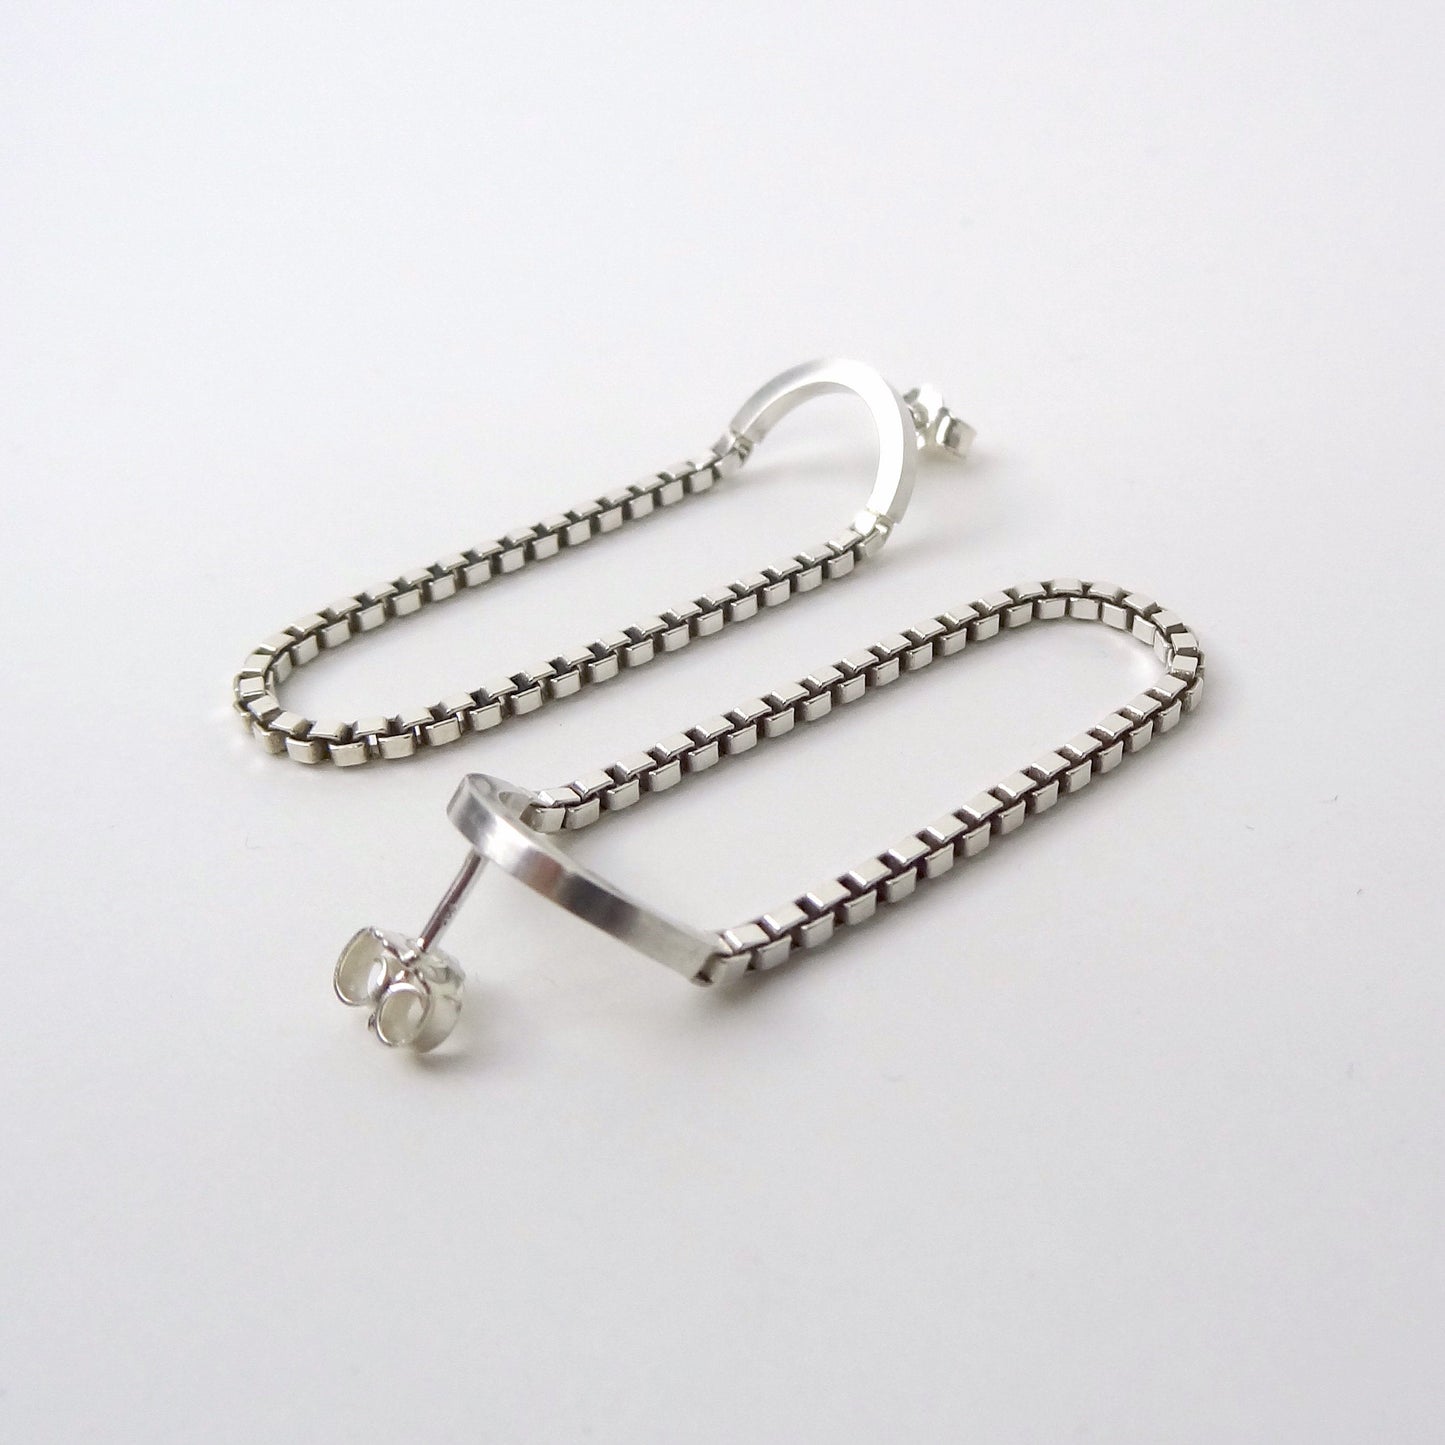 Edda | long oval earrings with hanging chain